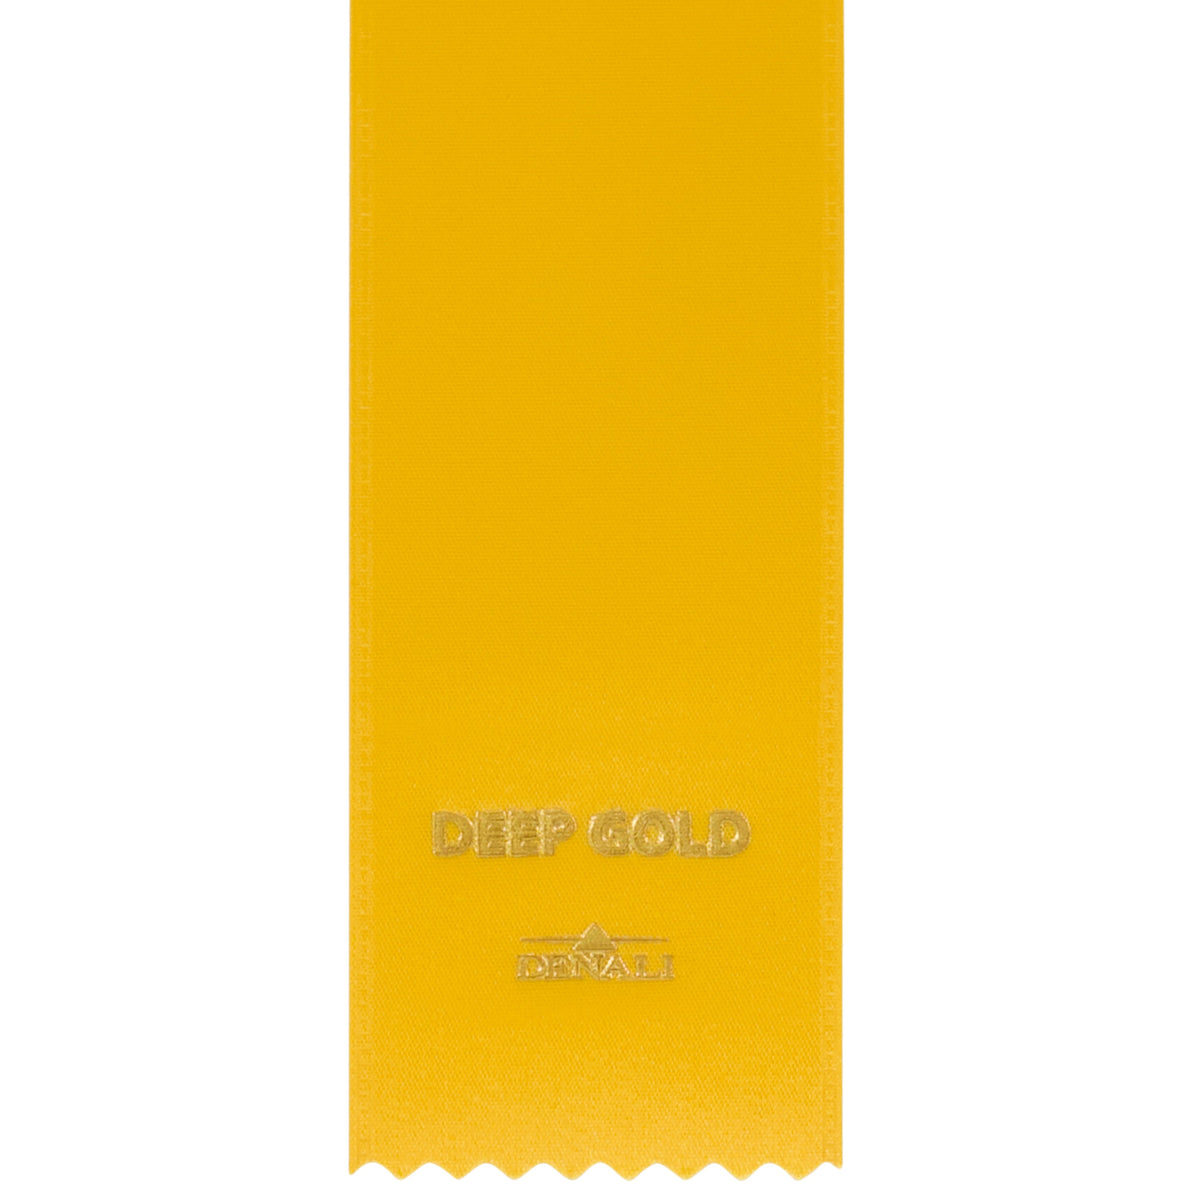 Style 290 Gold Galaxy II Edge Ribbon [2&quot;]